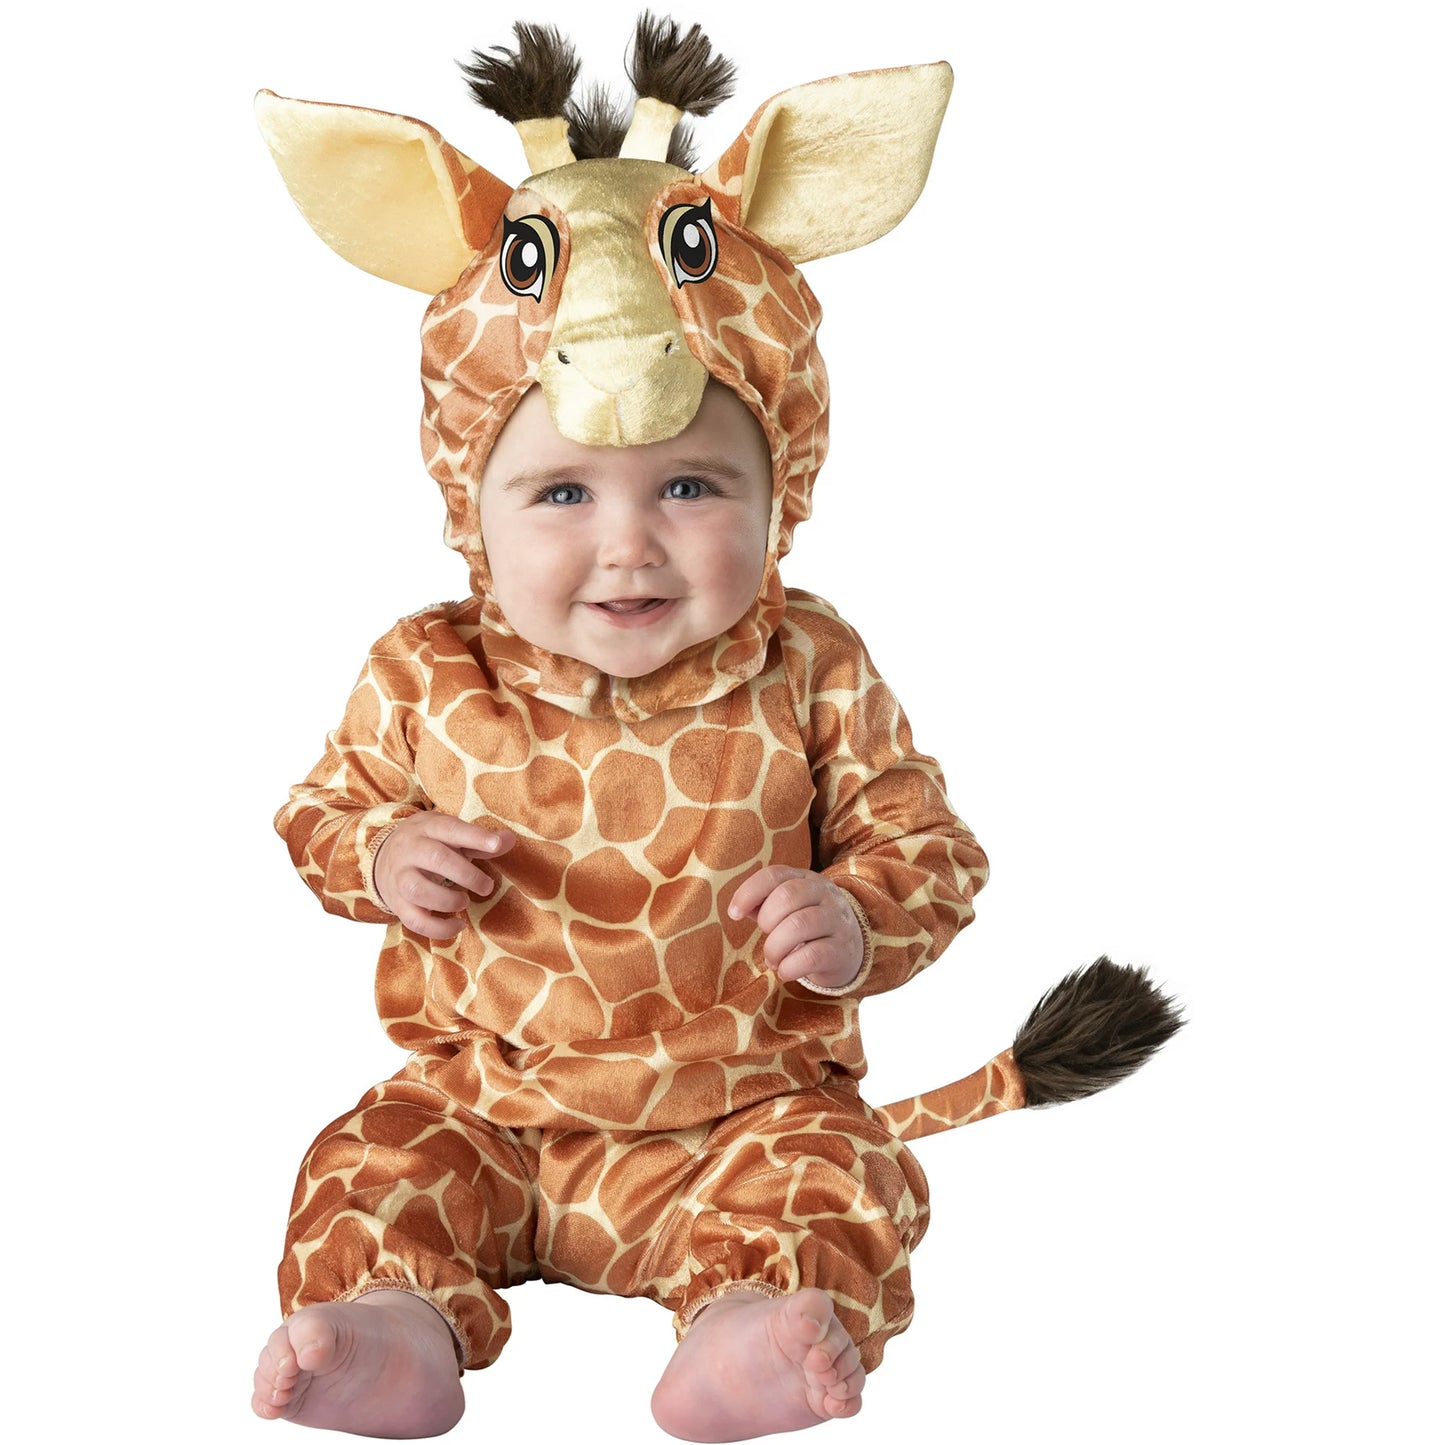 Baby Giraffe Toddler - 12-18